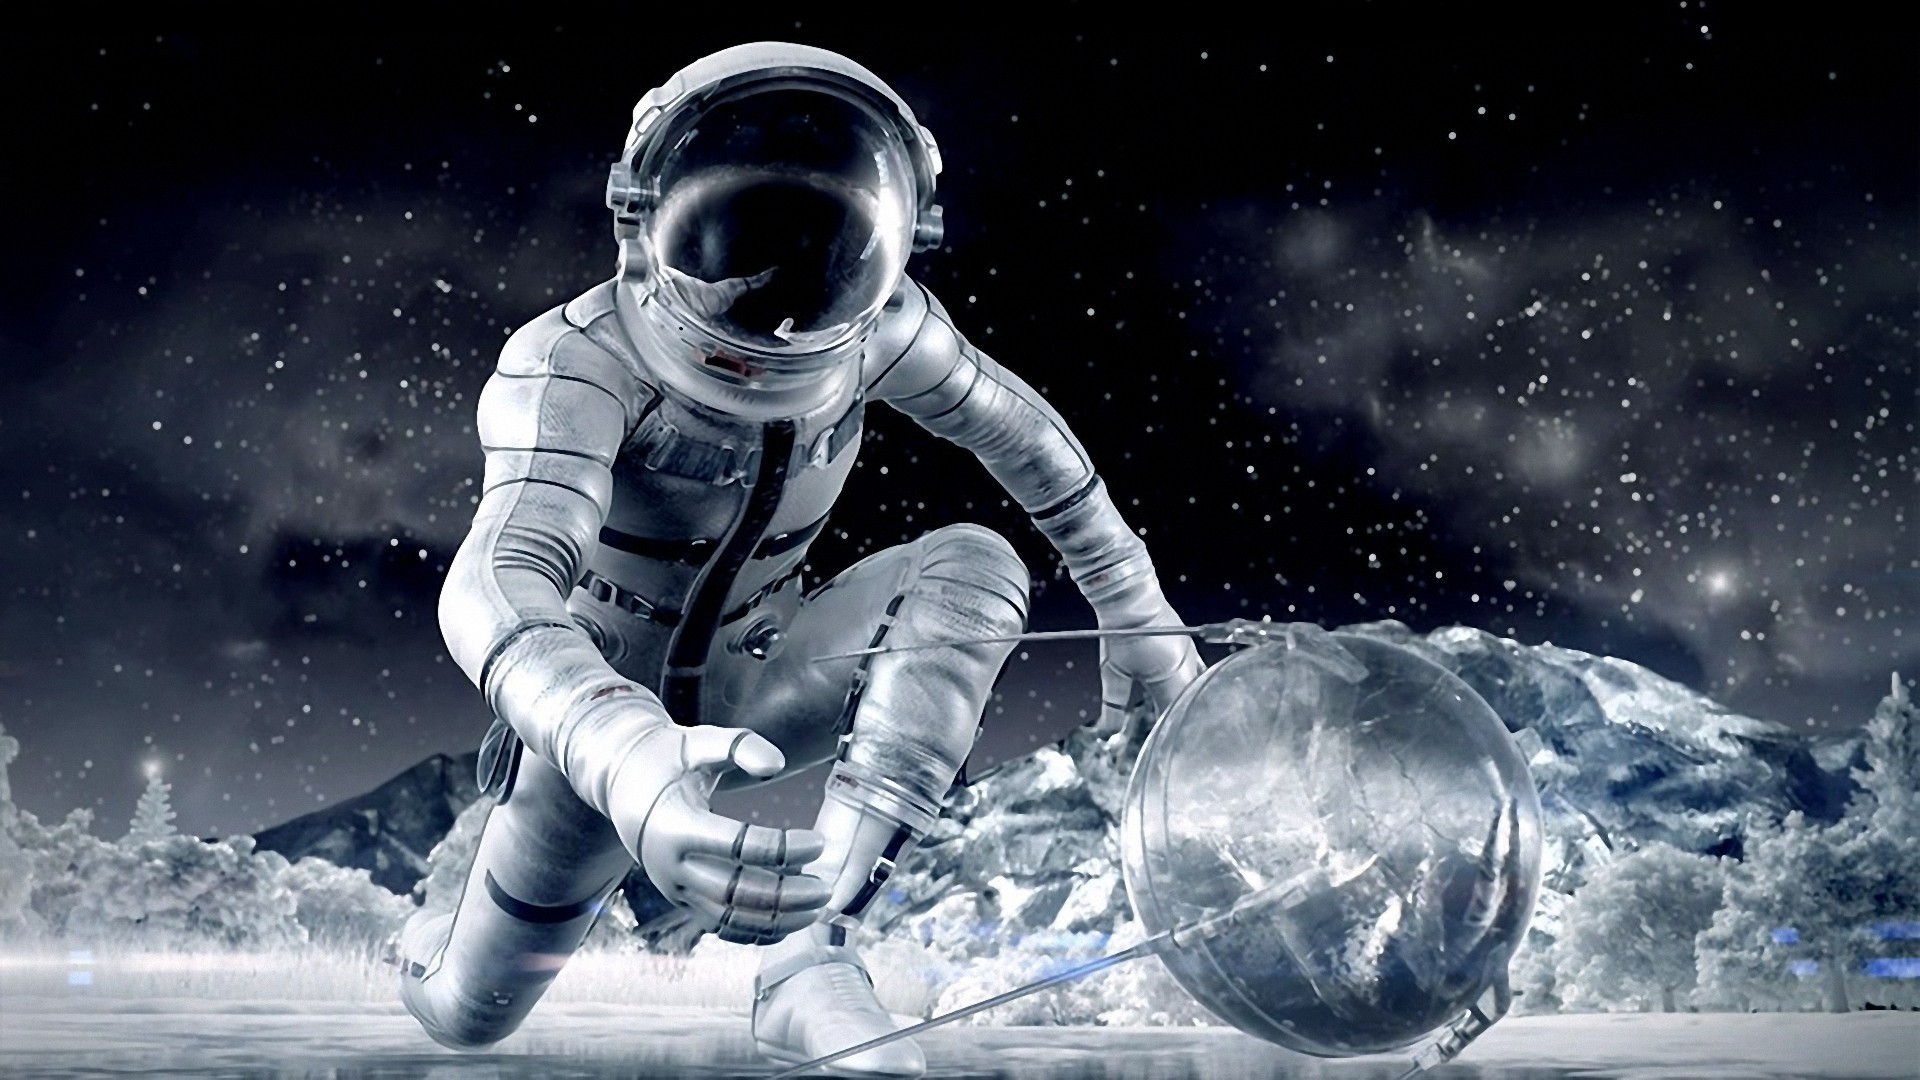 Fondos de Pantalla Astronautas Casco 3D Gráficos Сosmos descargar imagenes